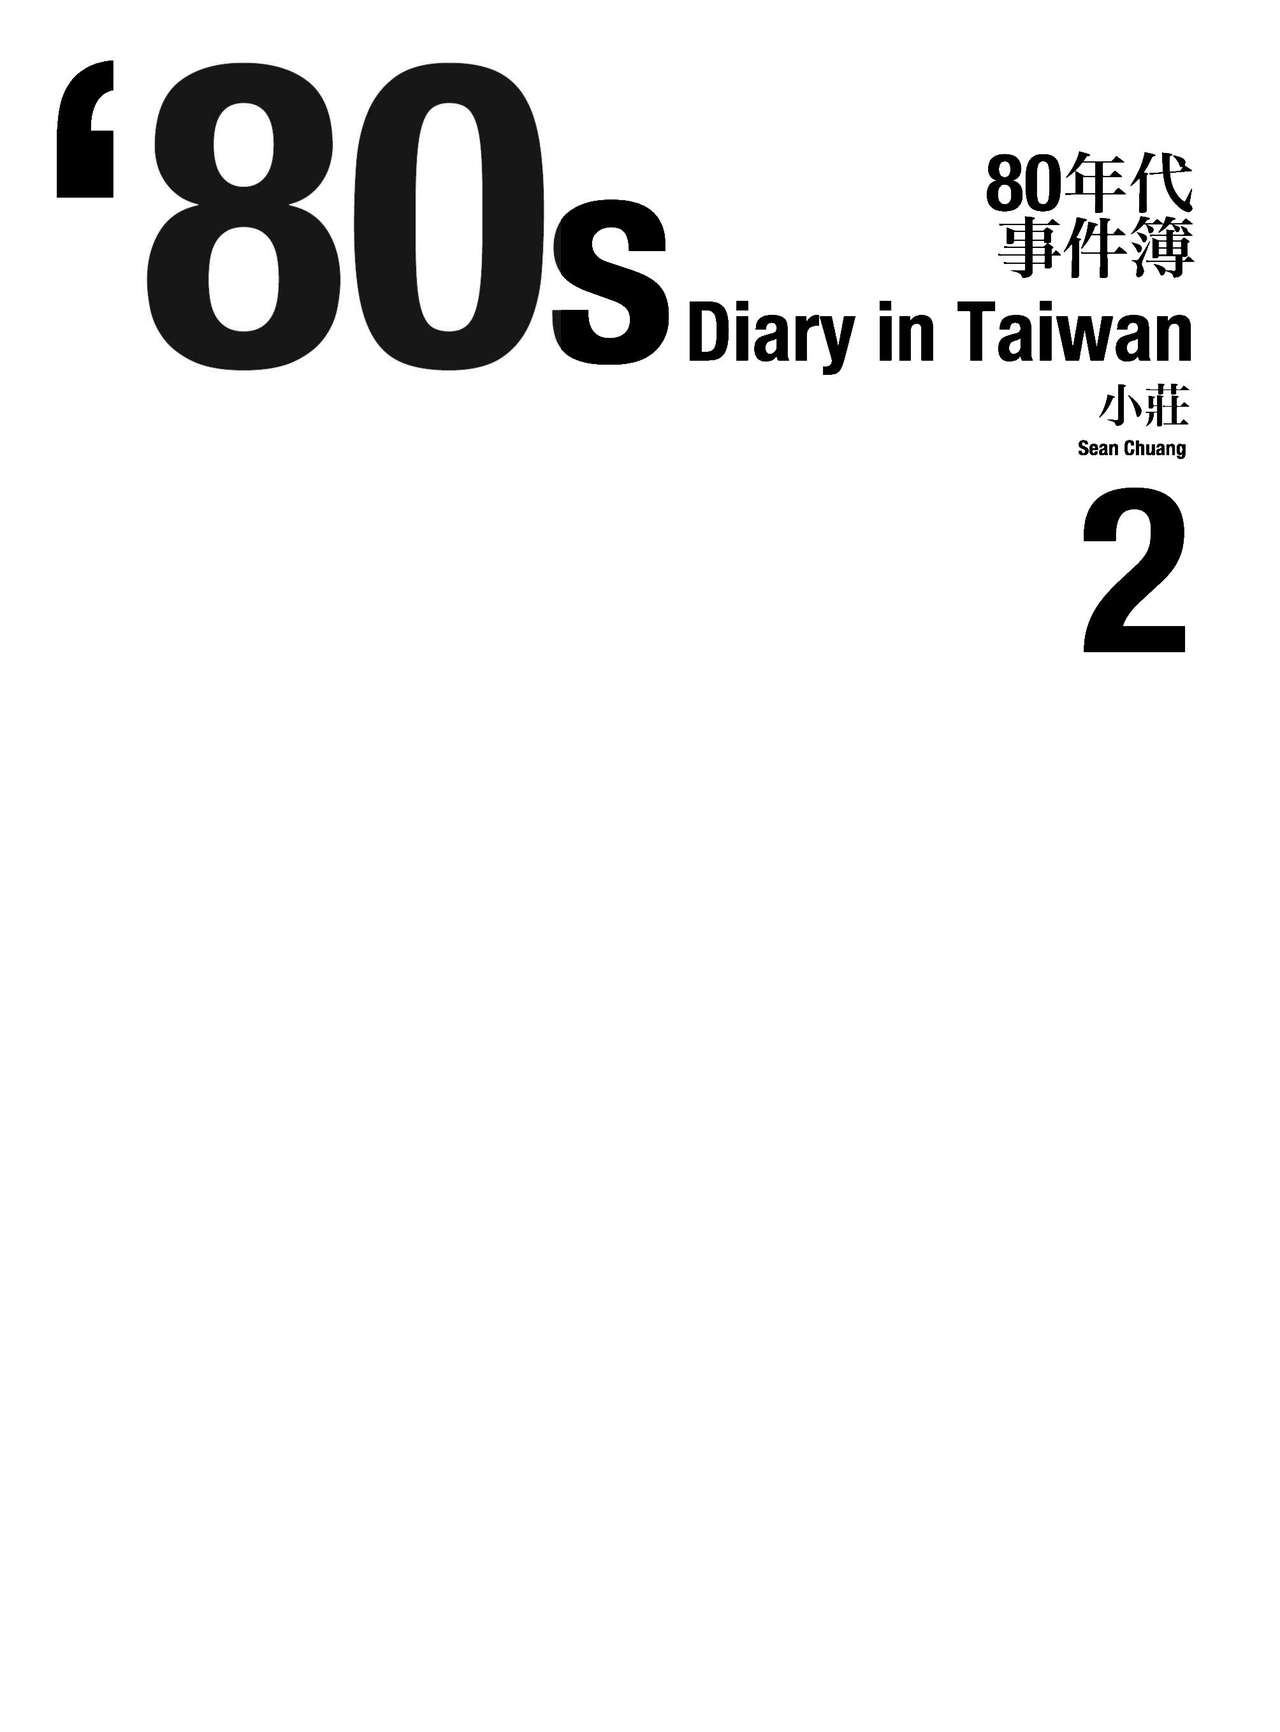 [Sean Chuang] 80’S Diary in Taiwan 2 1